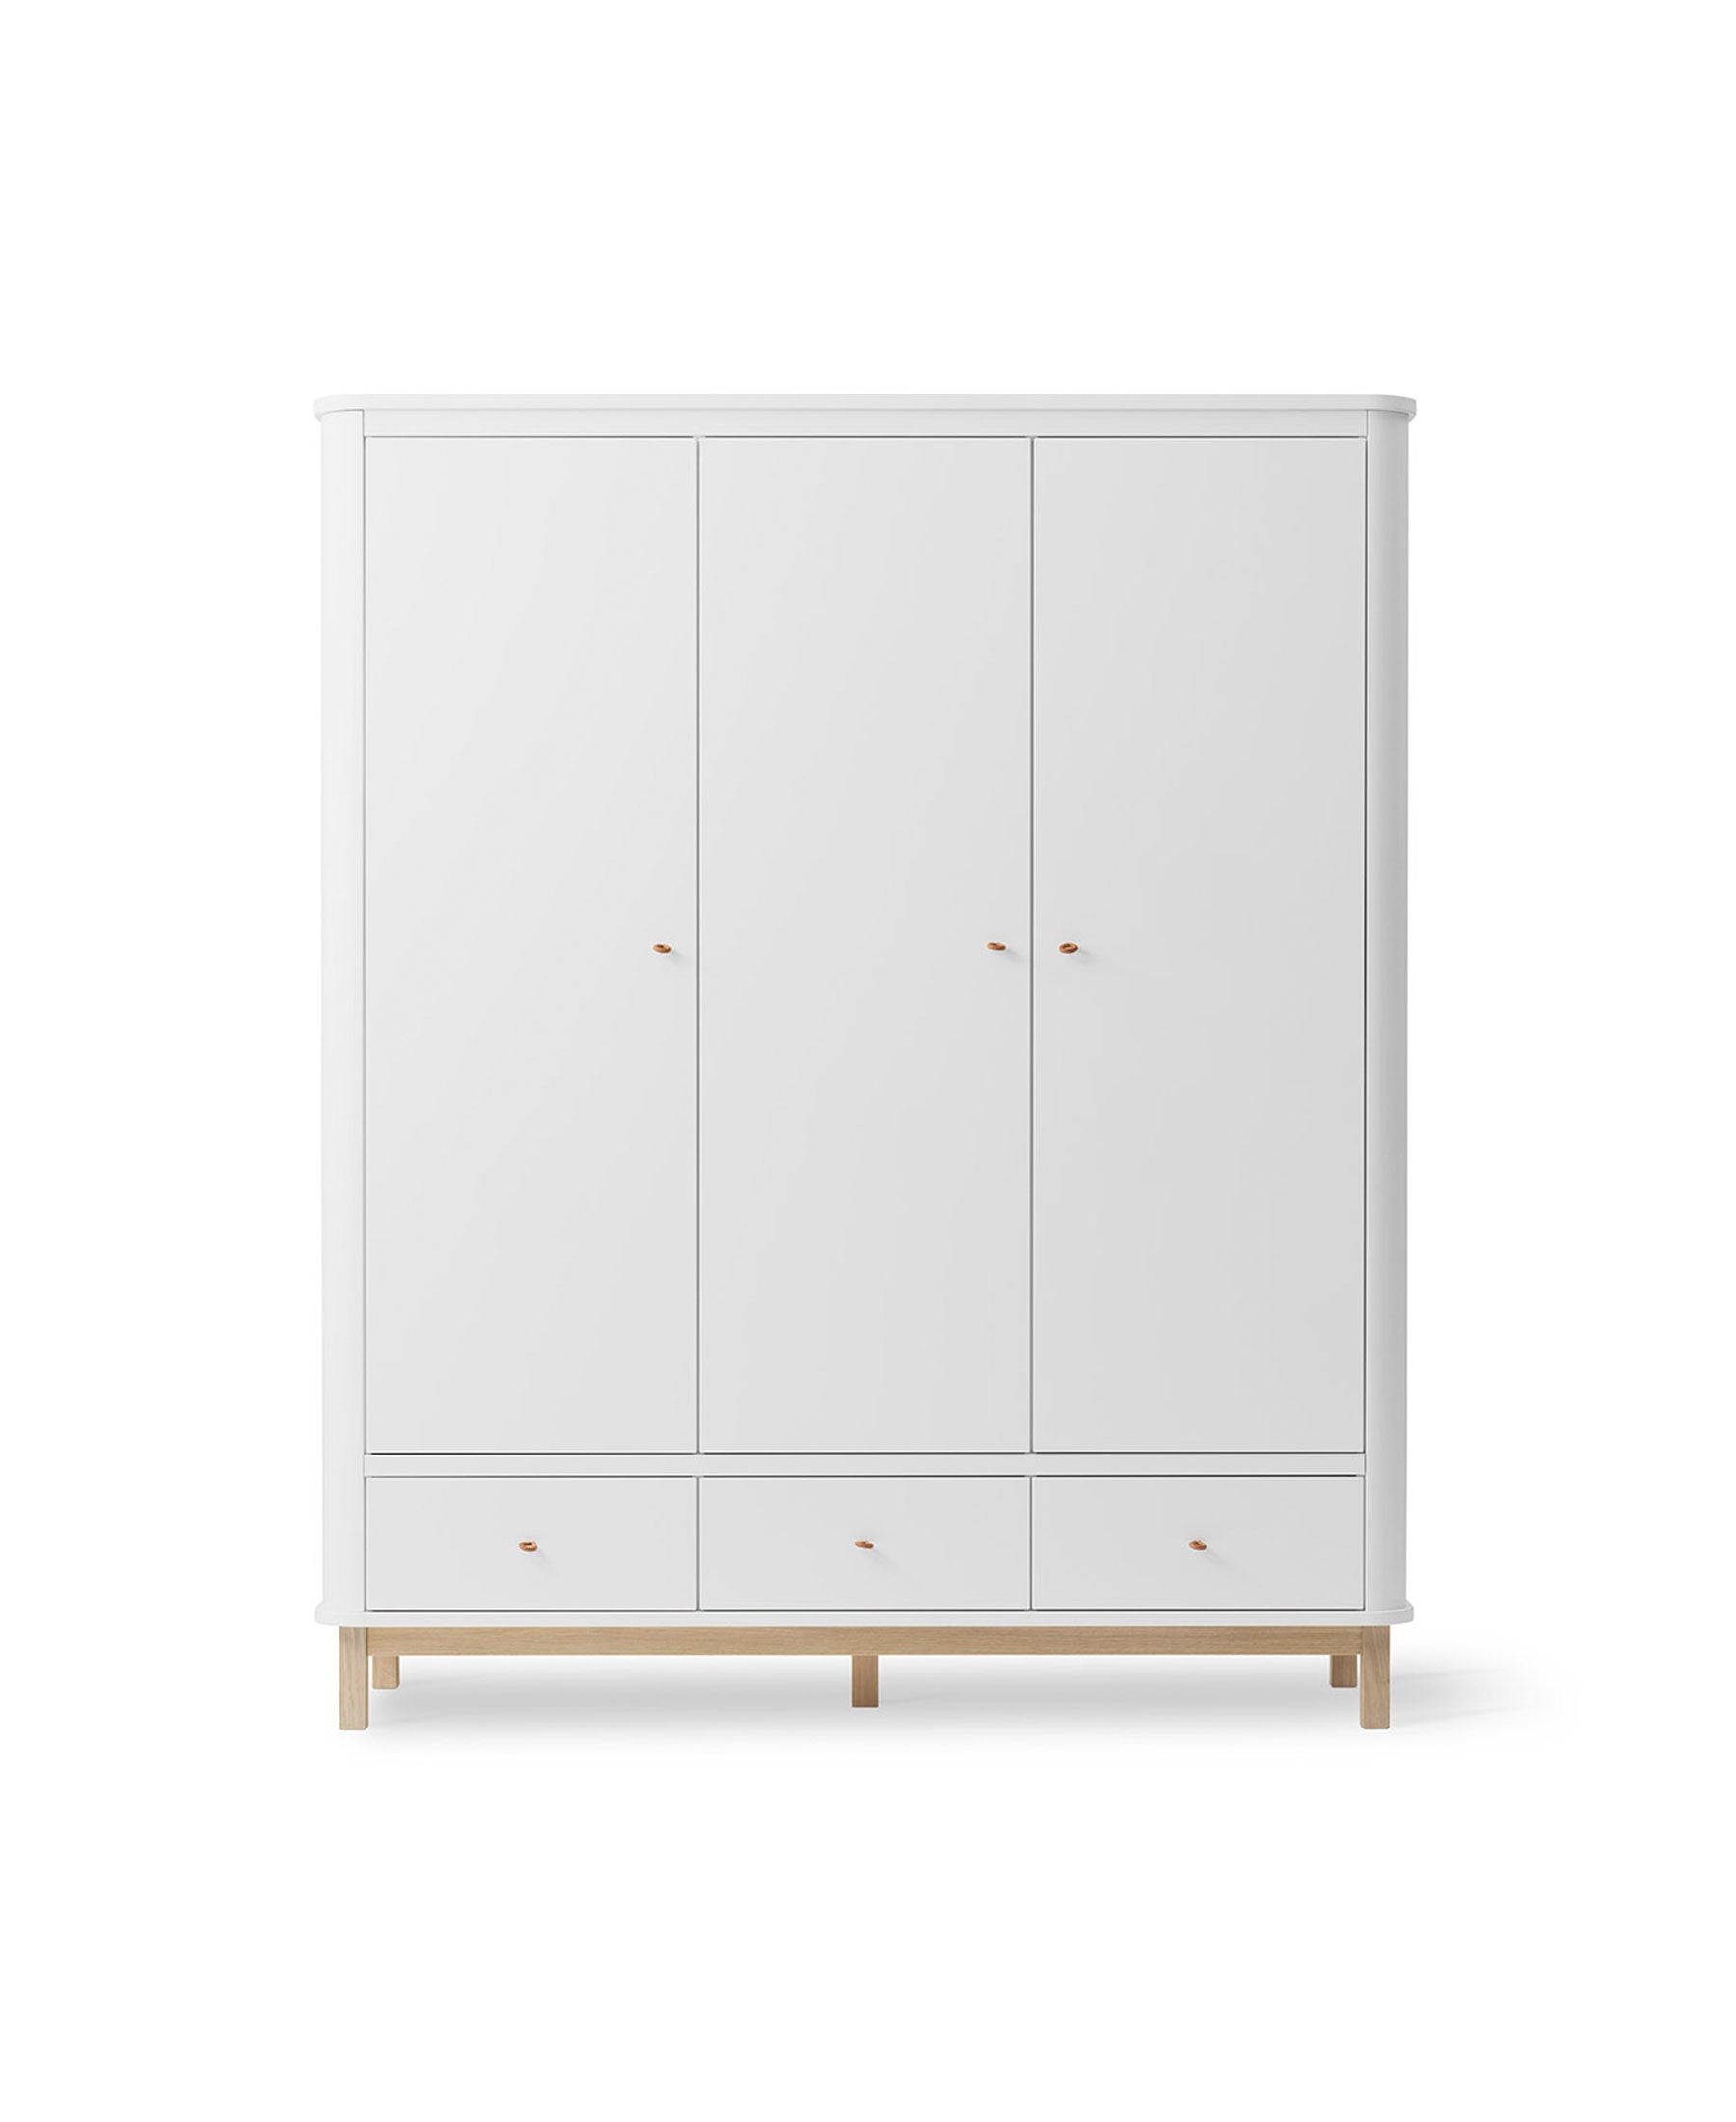 Oliver Furniture Wood Wardrobe 3 Doors in White/Oak